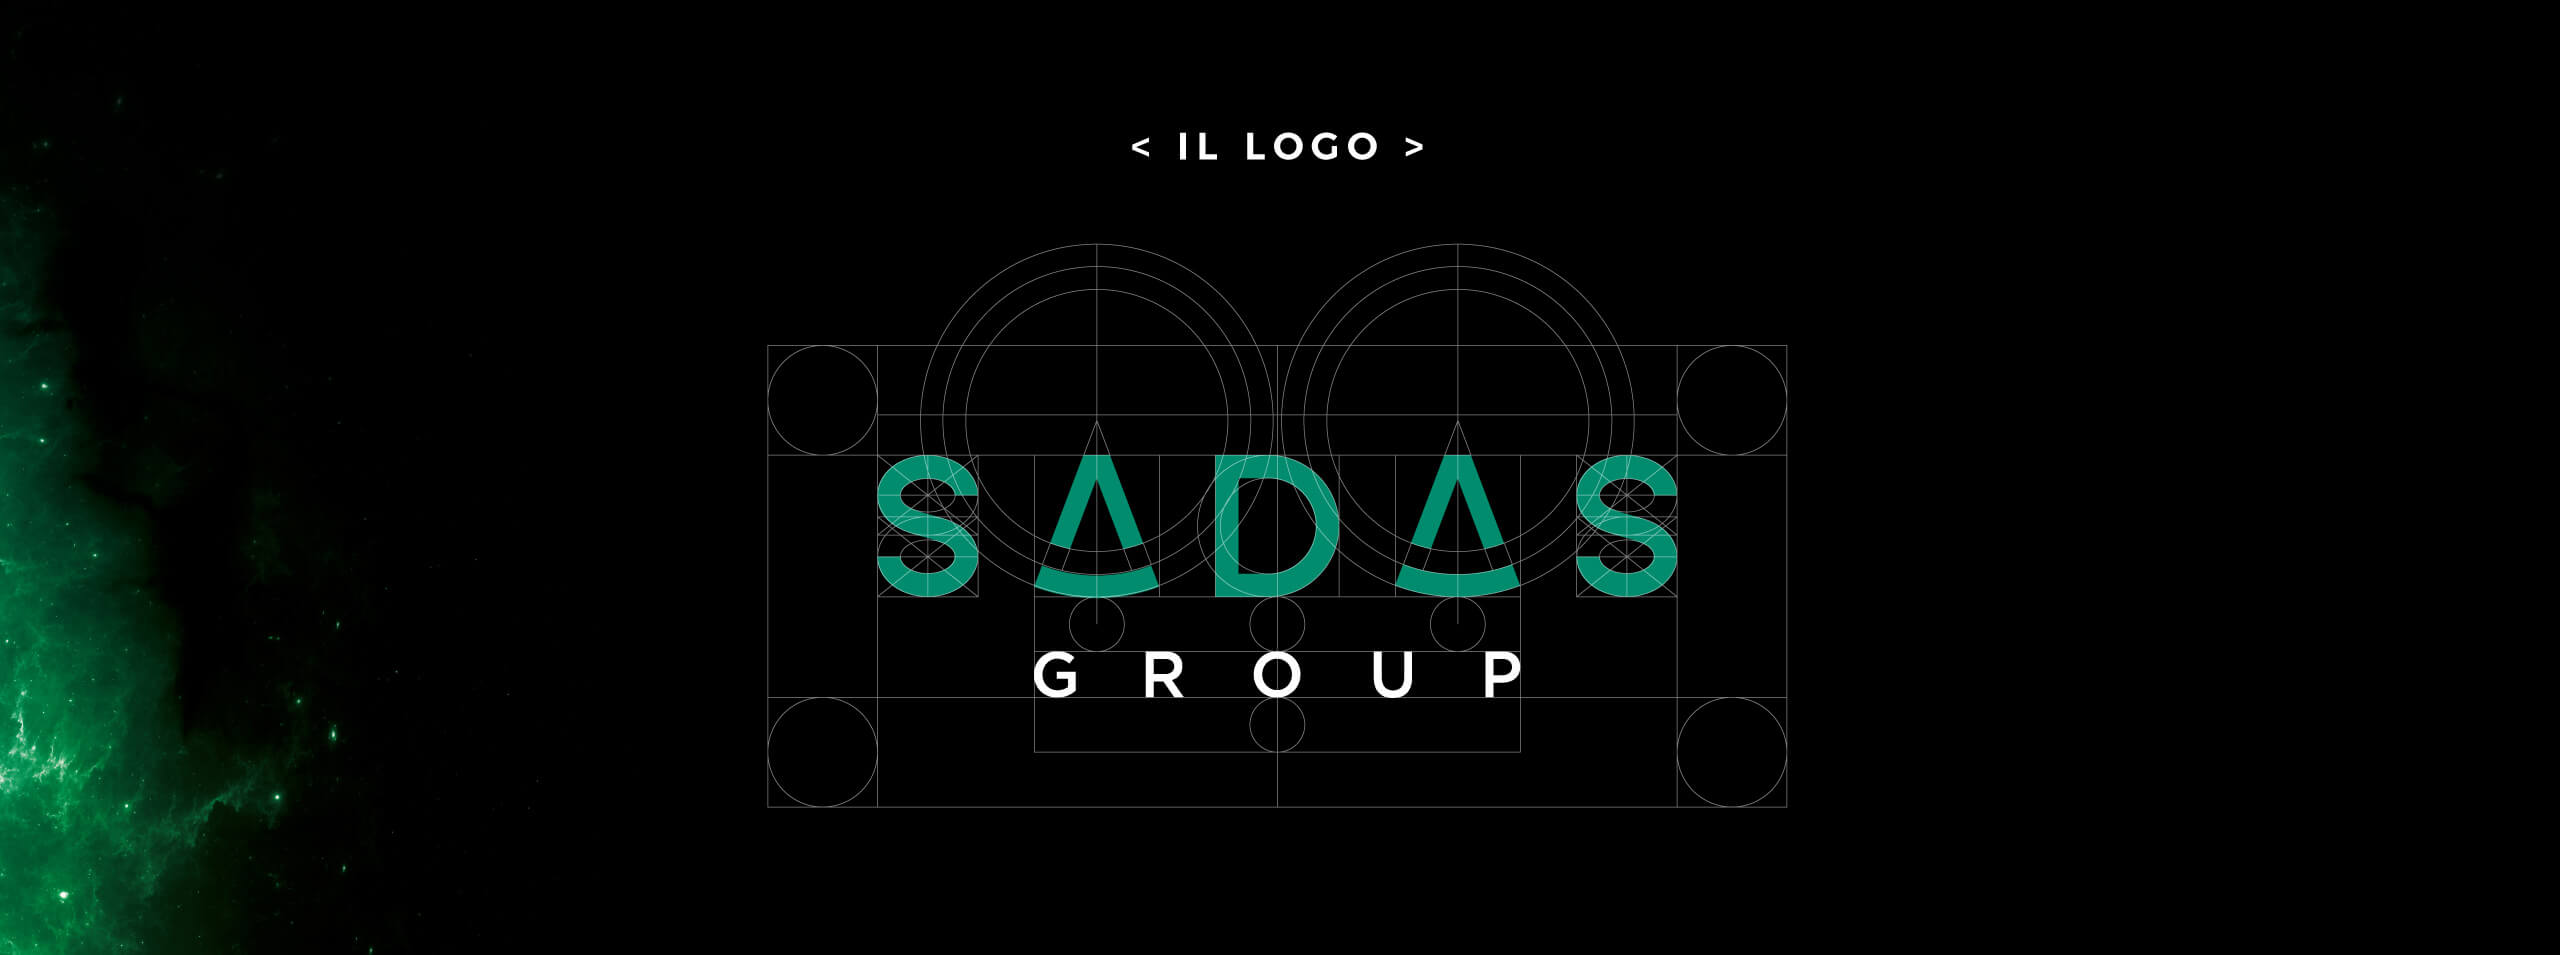 brand sadas group immagine coordinata